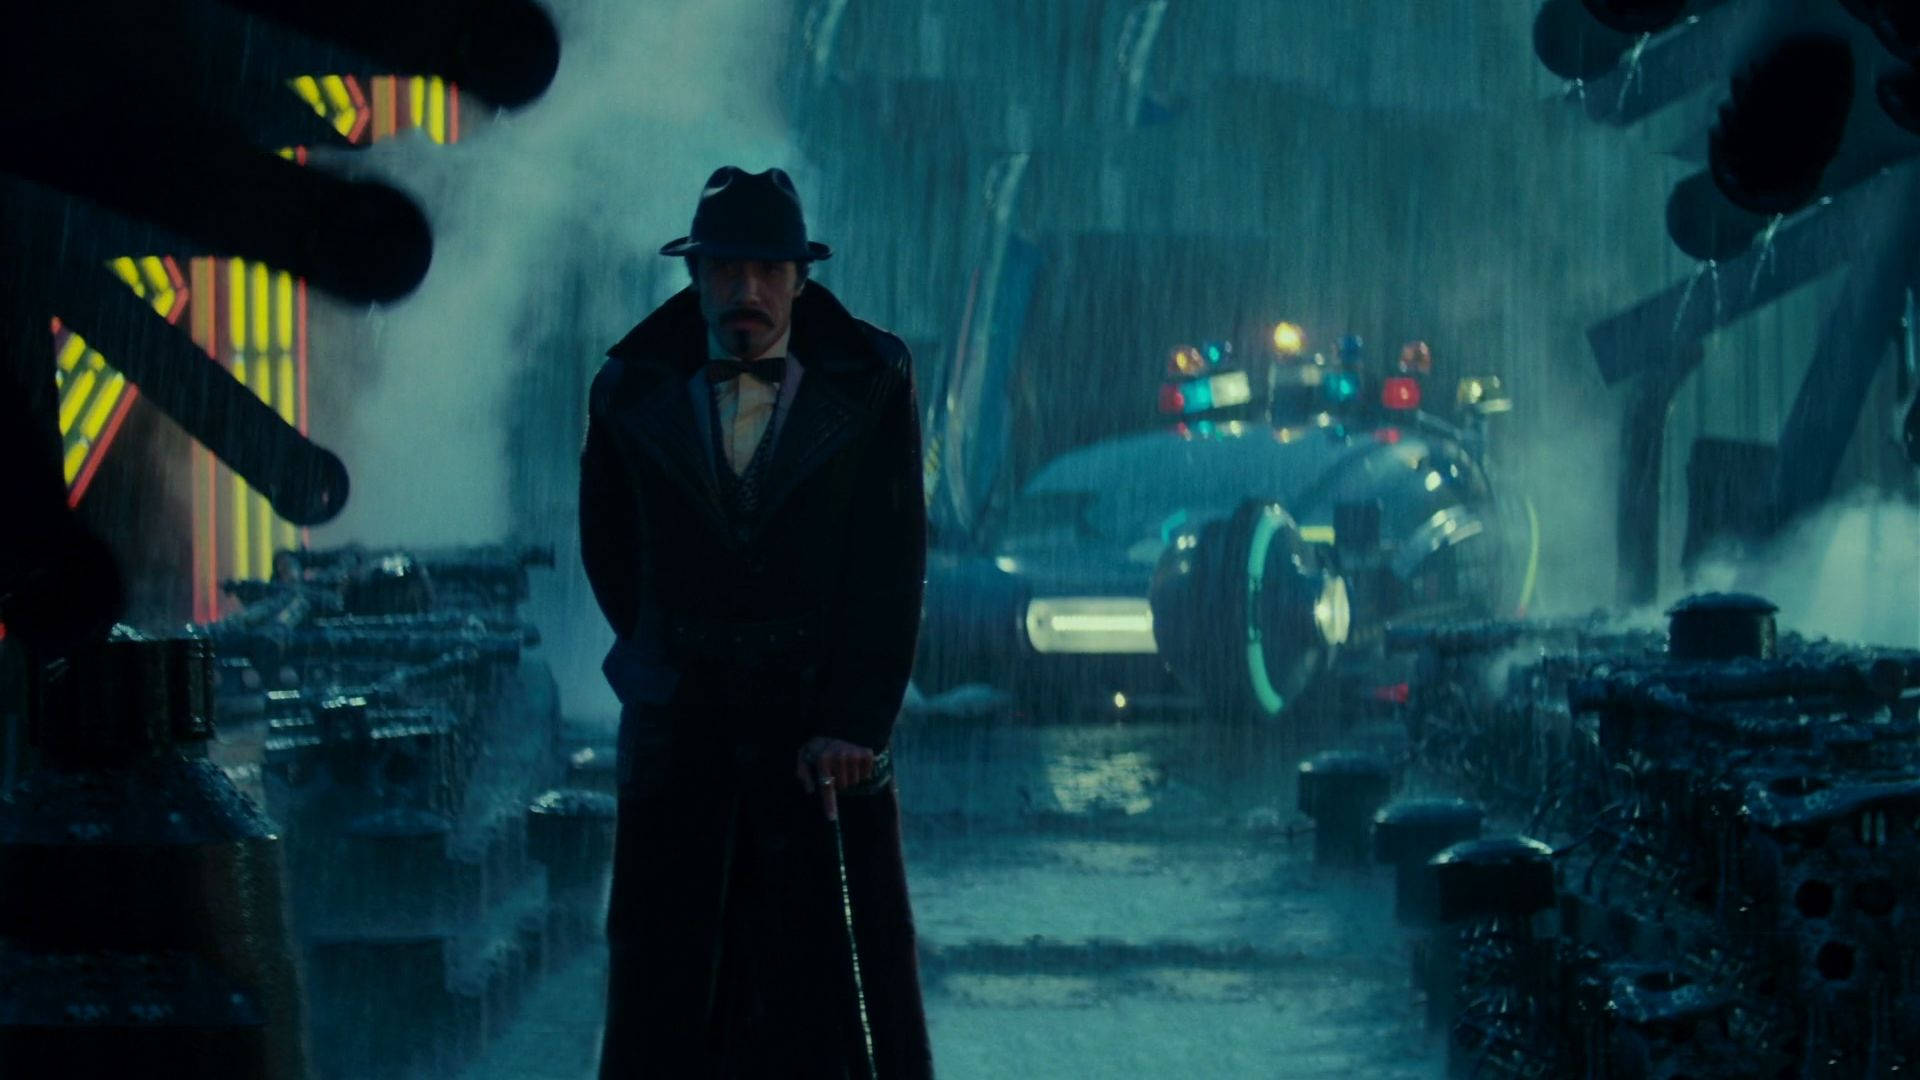 “Gaff in the rain” from Blade Runner (1982) Wallpaper